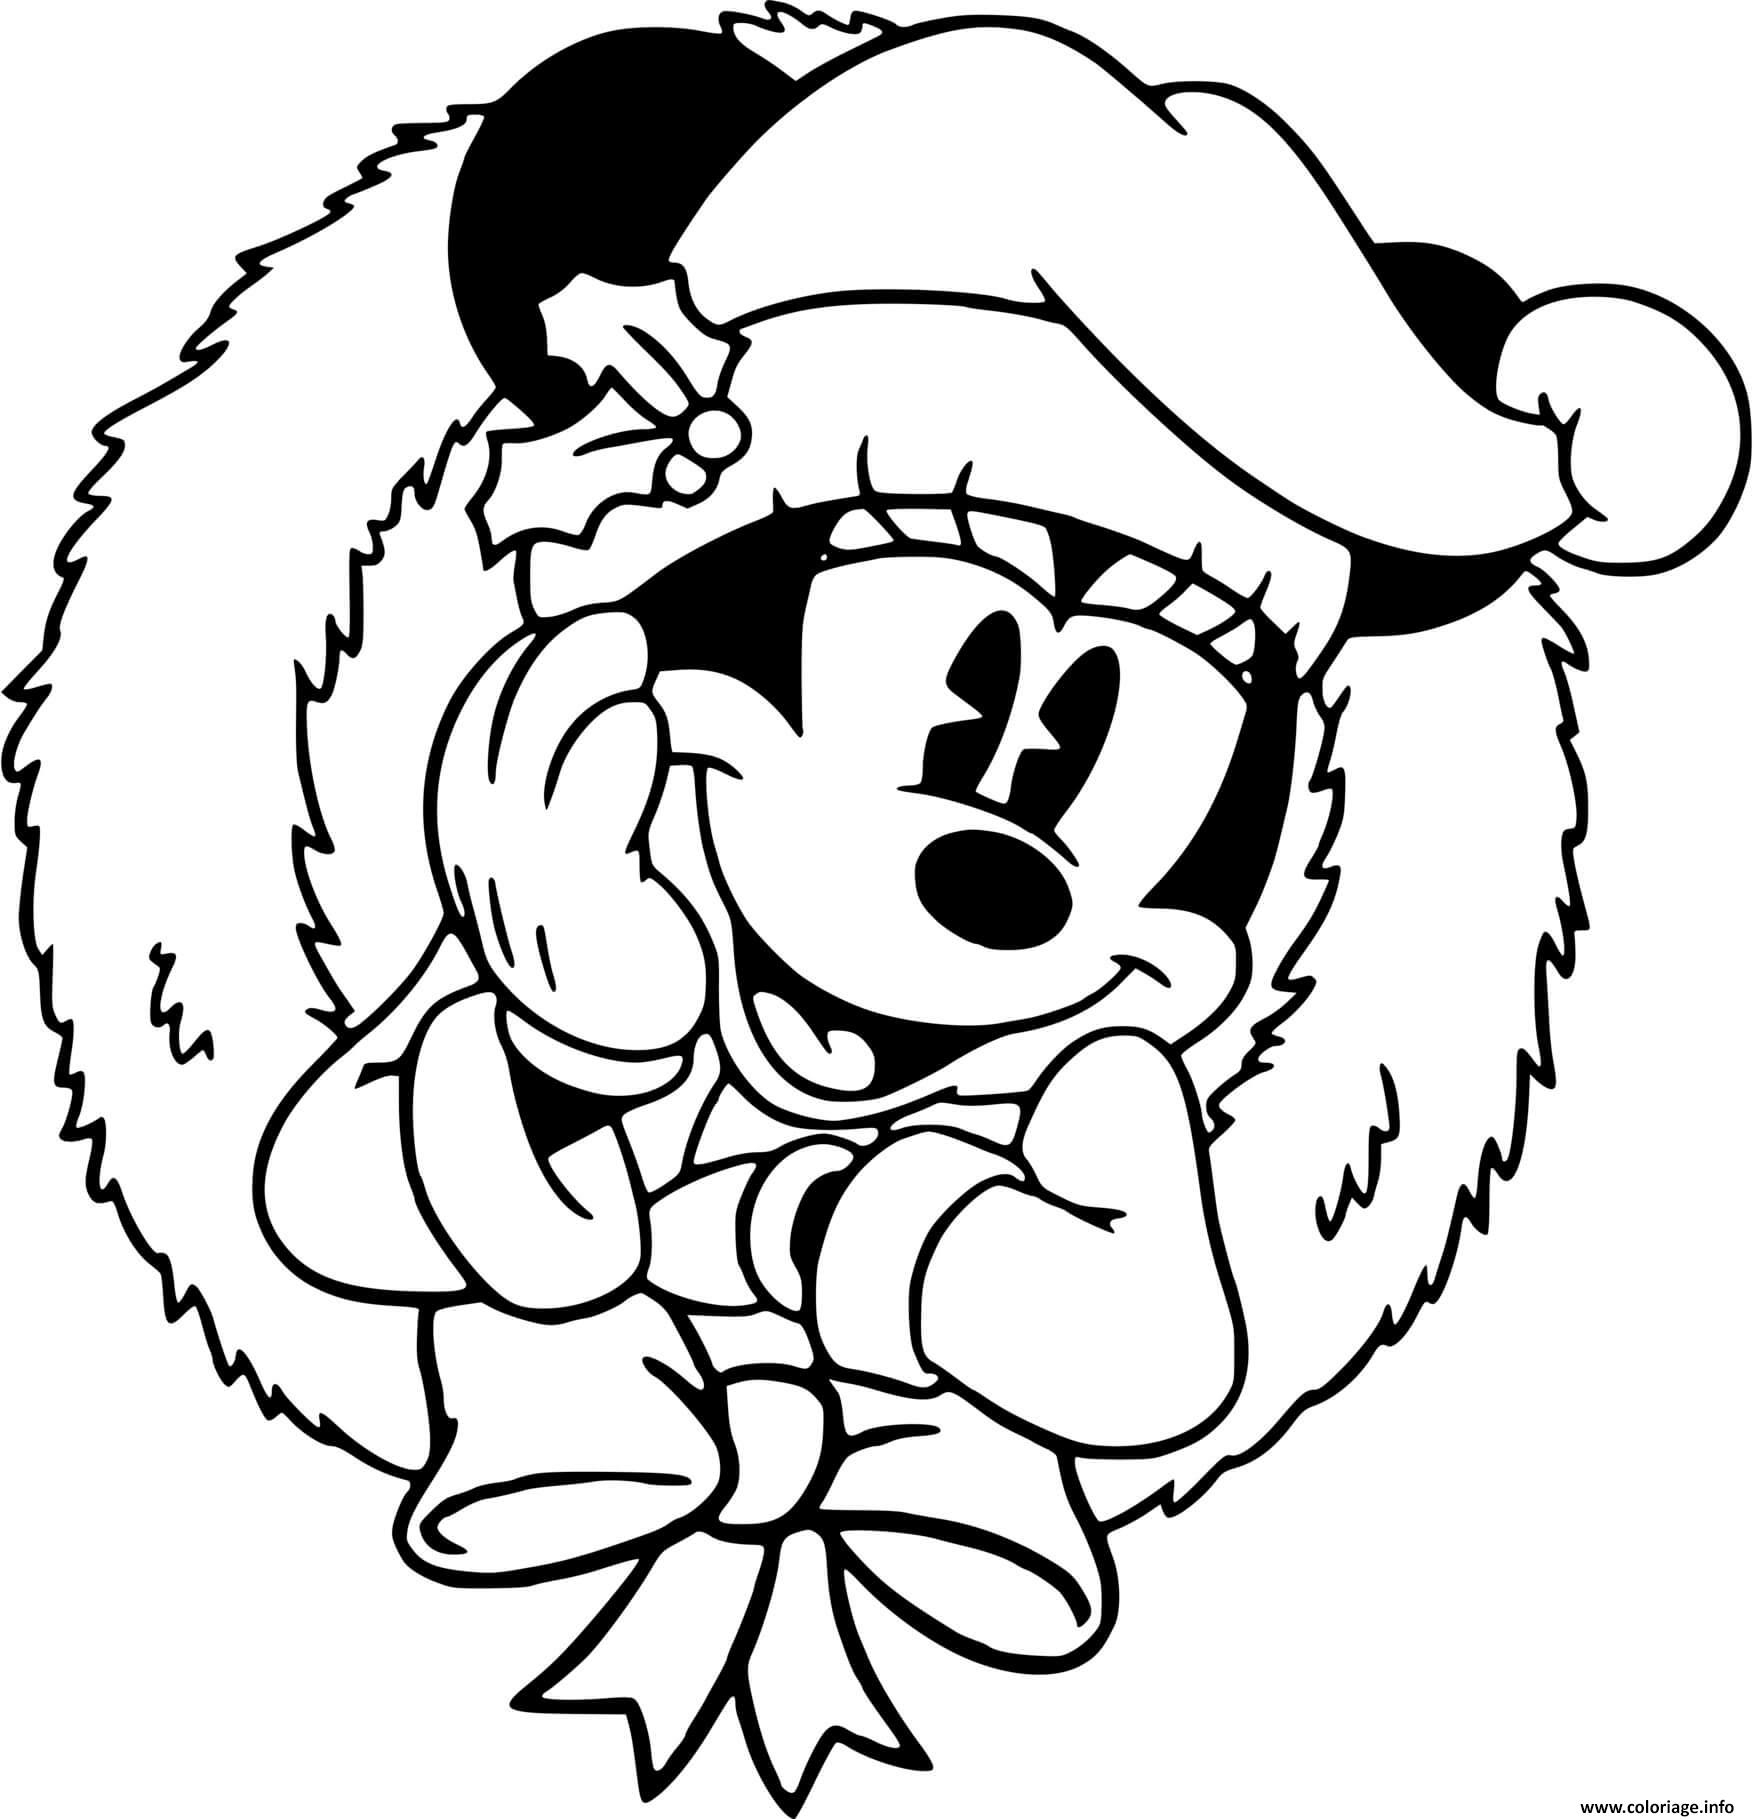 Coloriage Classic Minnie In A Wreath Dessin Noel Disney À Imprimer concernant Coloriage Noël 